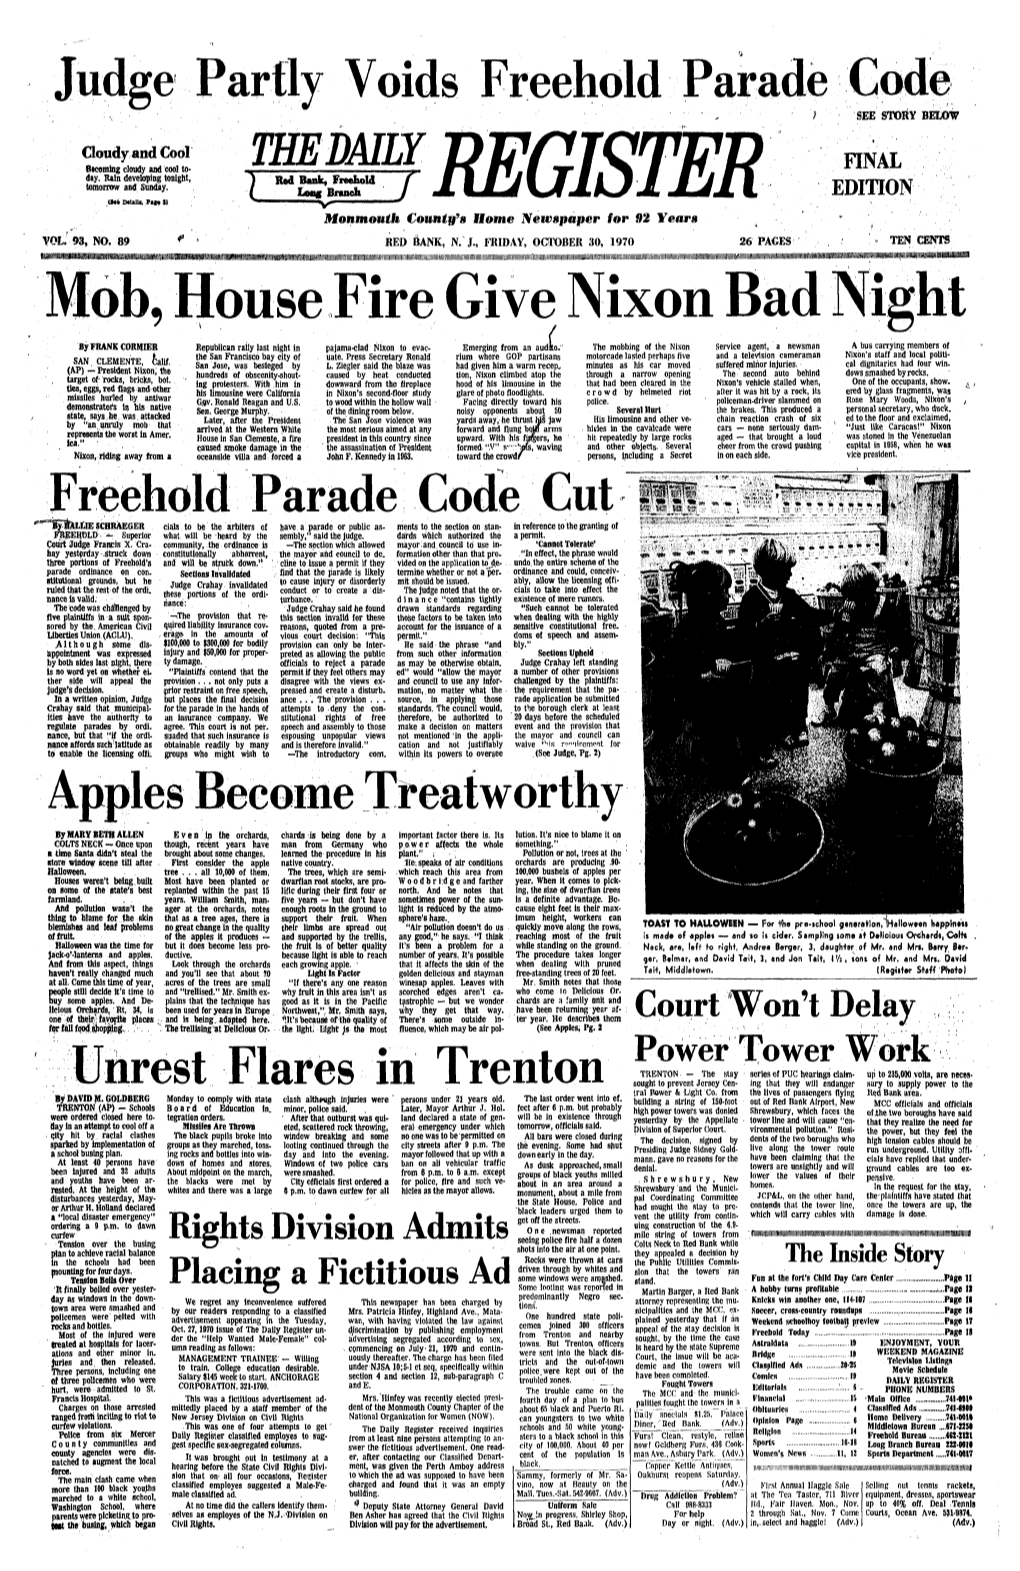 Mob, House Fire Give Nixon Bad Night